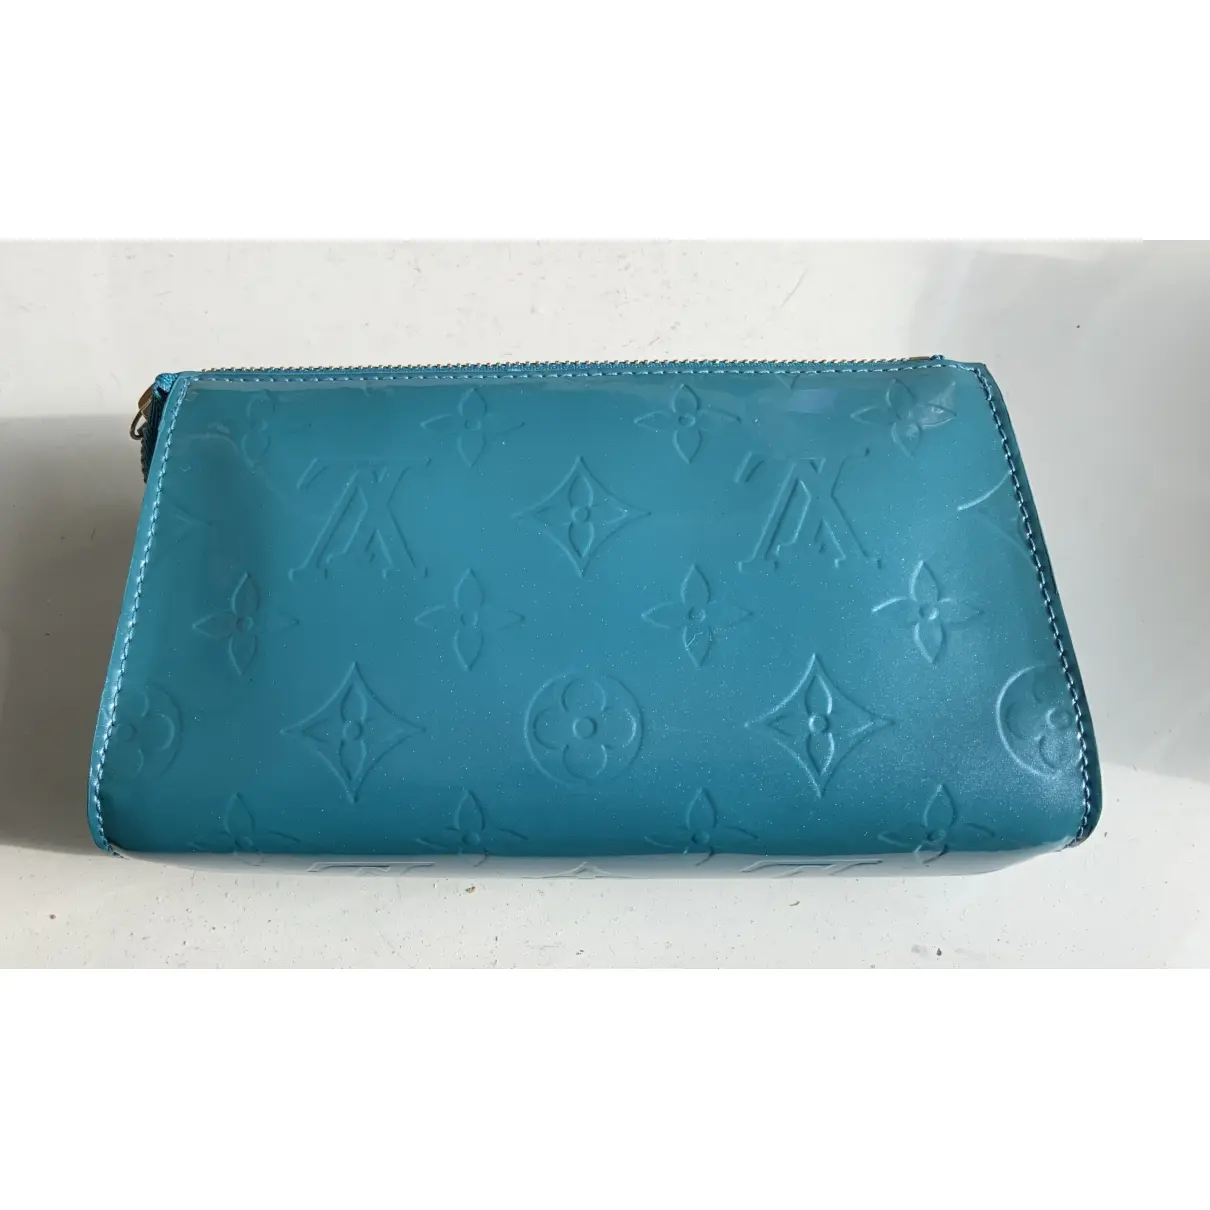 Buy Louis Vuitton Patent leather clutch bag online